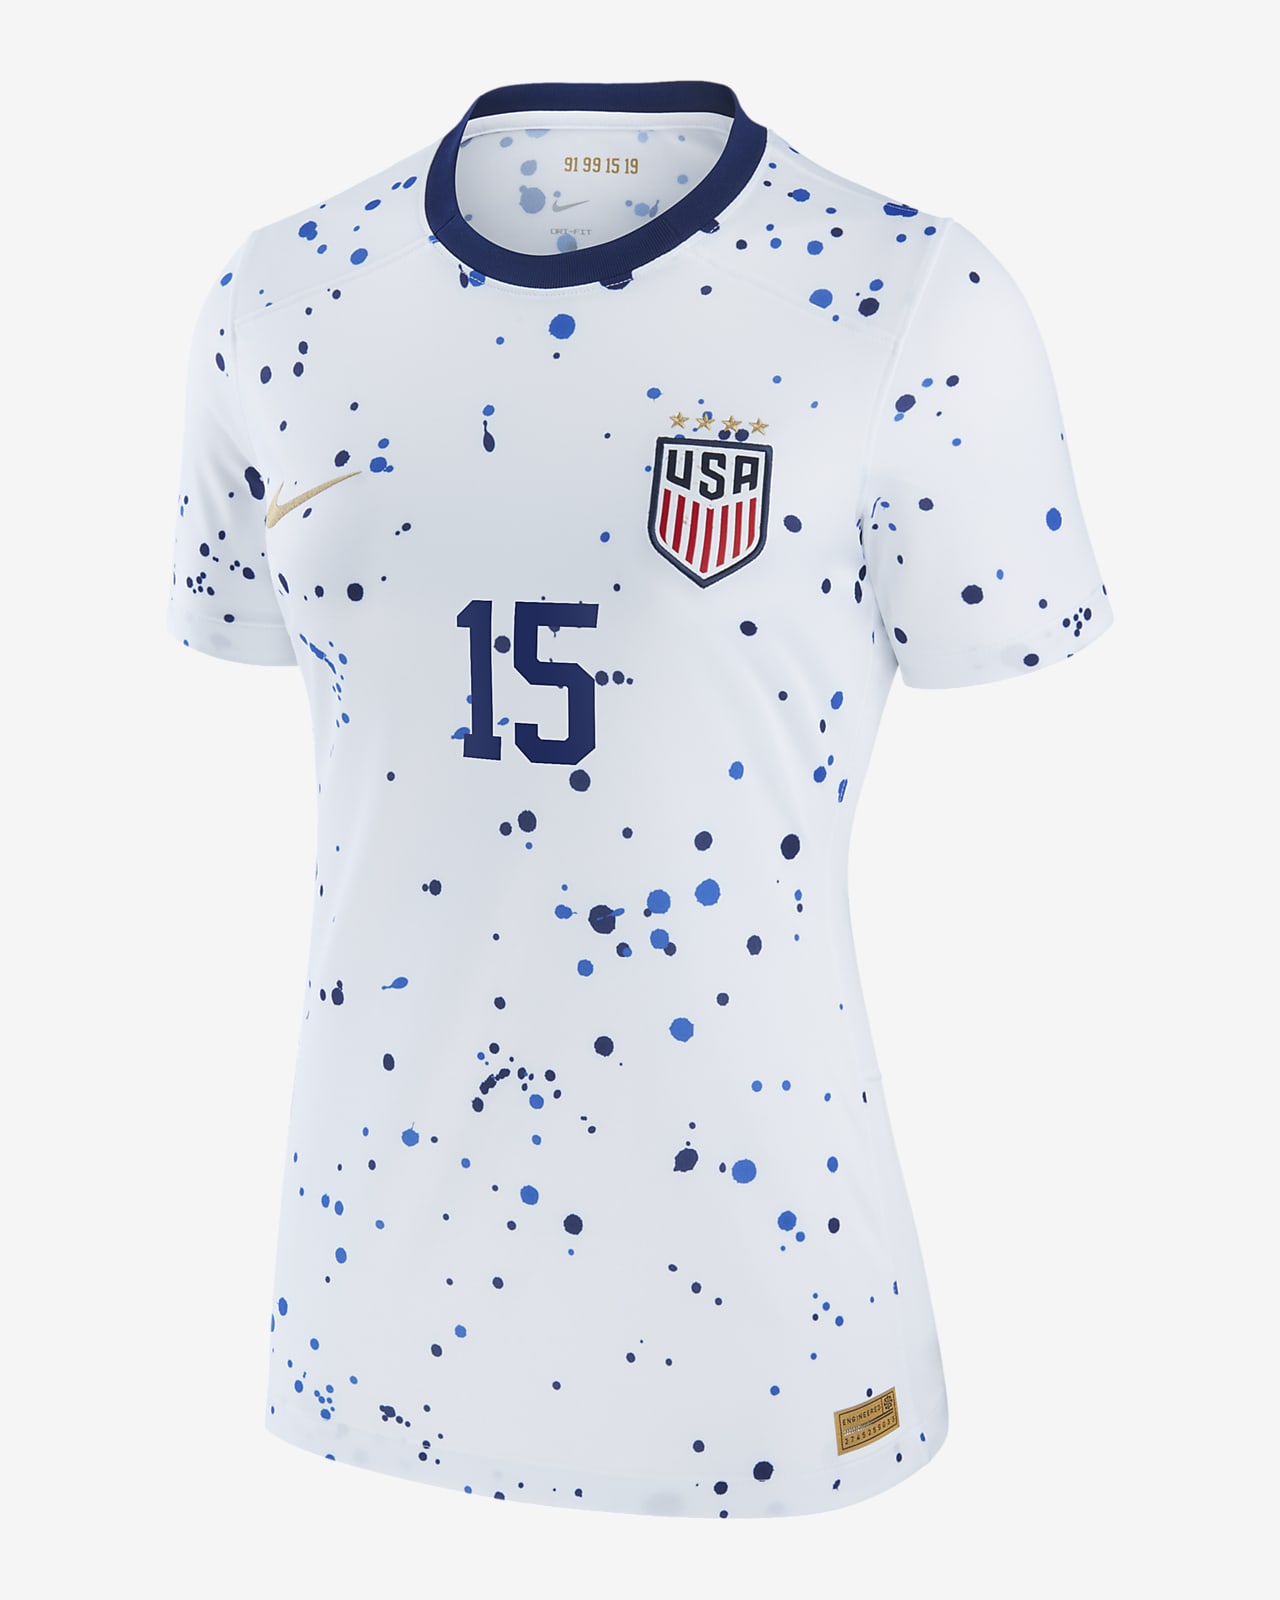 Men's Nike USA Dri-Fit States Baseball Jersey - Official U.S. Soccer Store